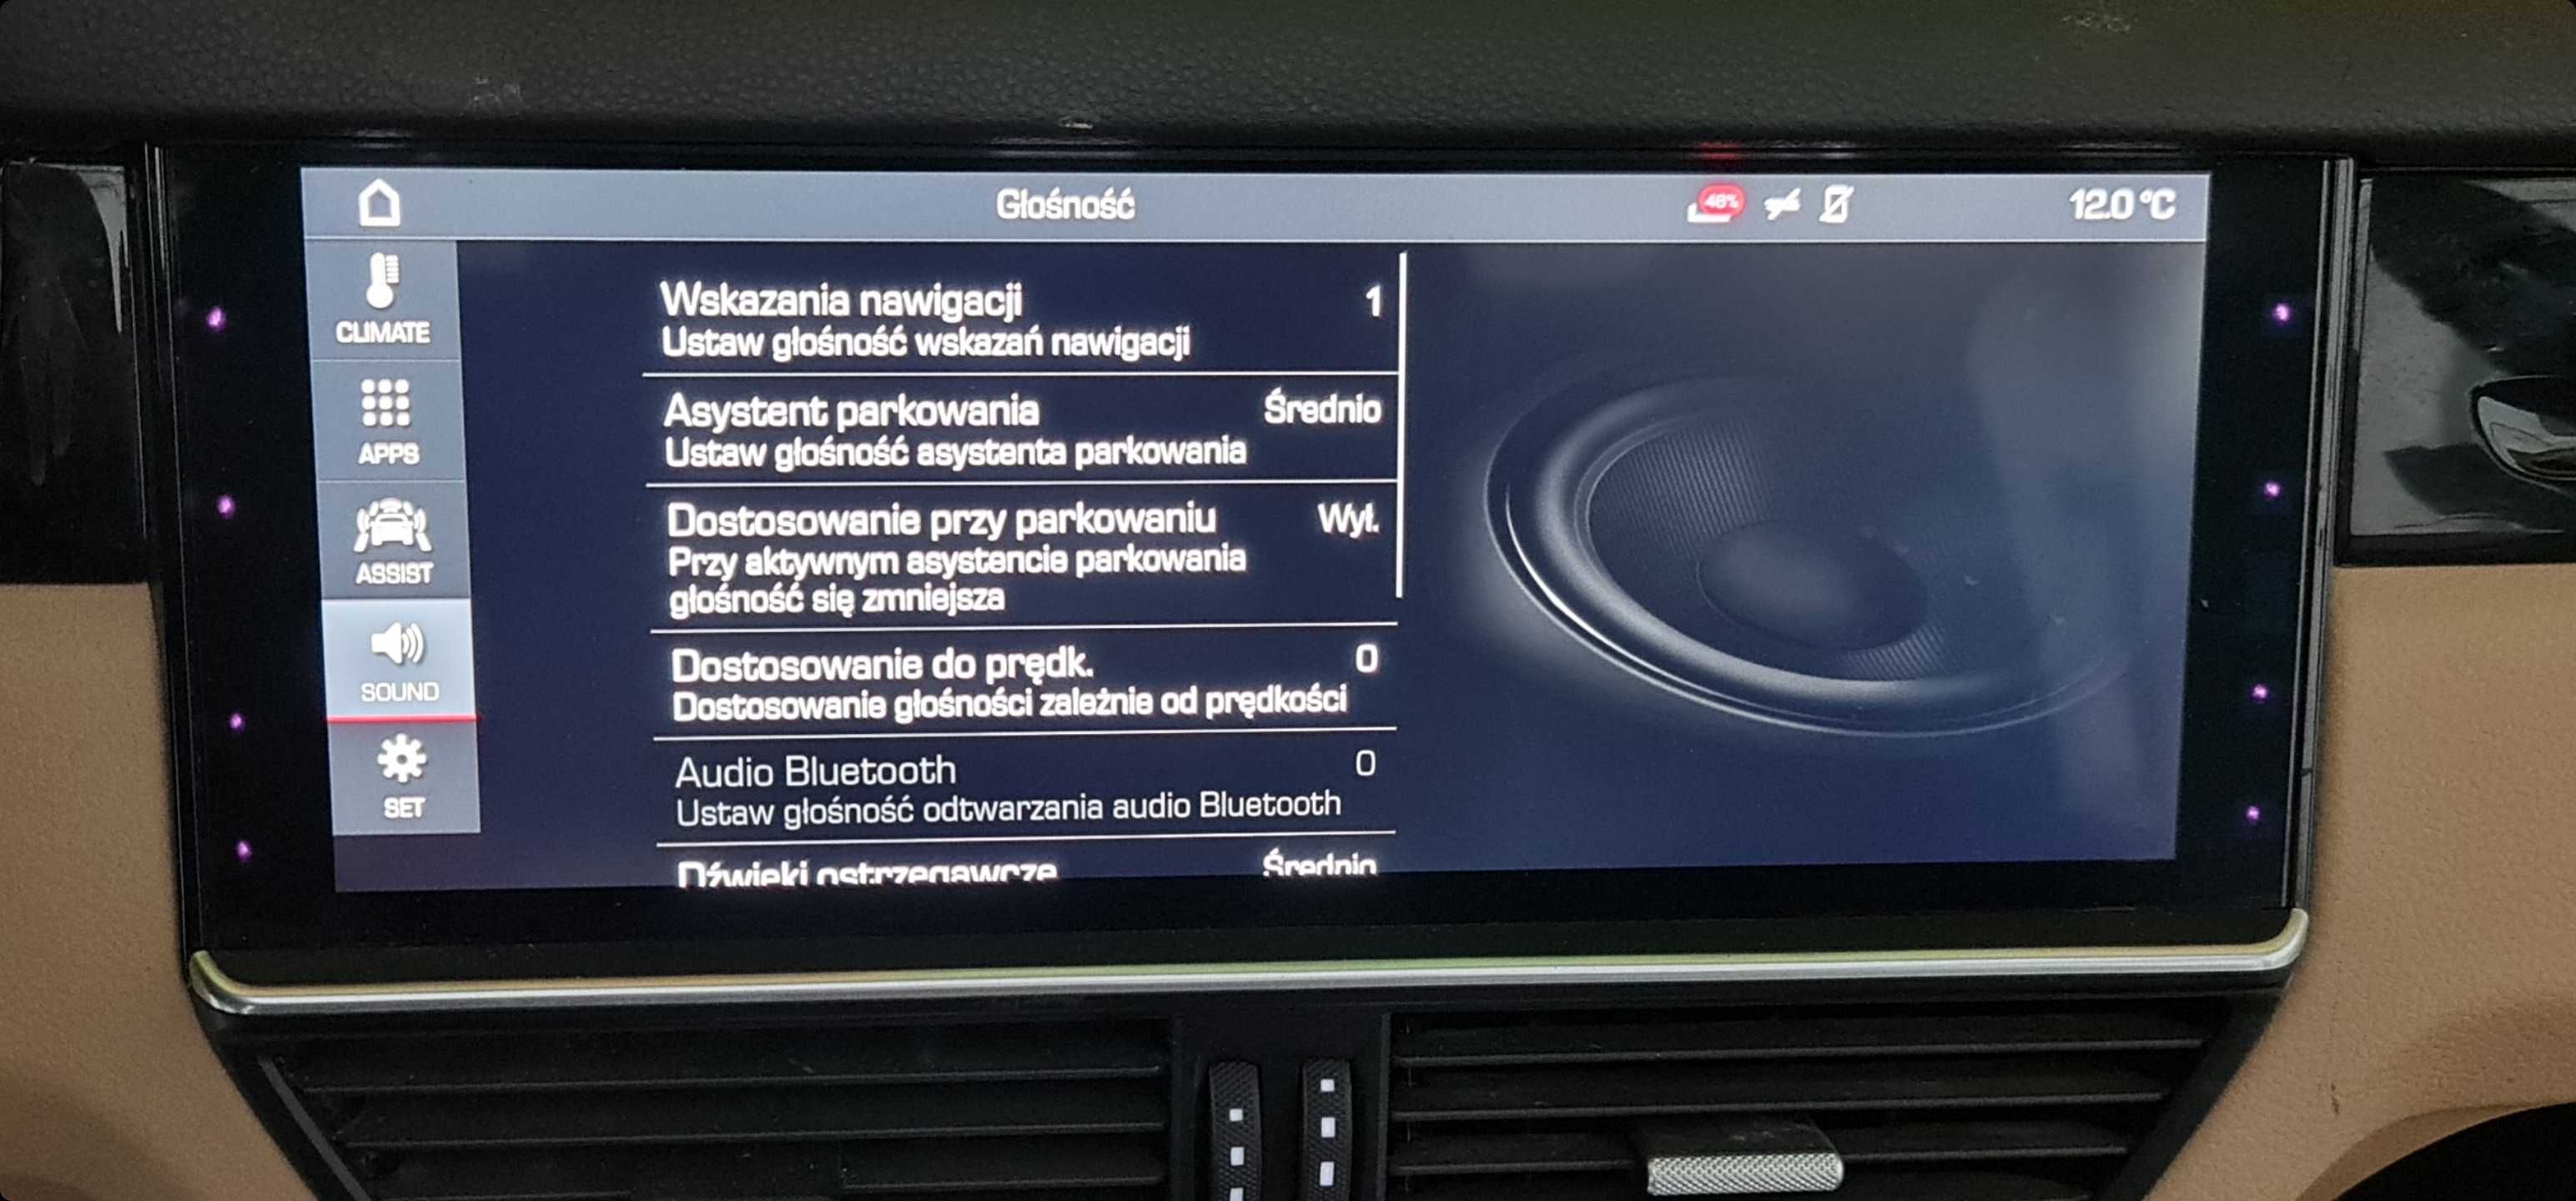 Polski jezyk polskie menu MH2P Porsche macan cayenne panamera 911 usa